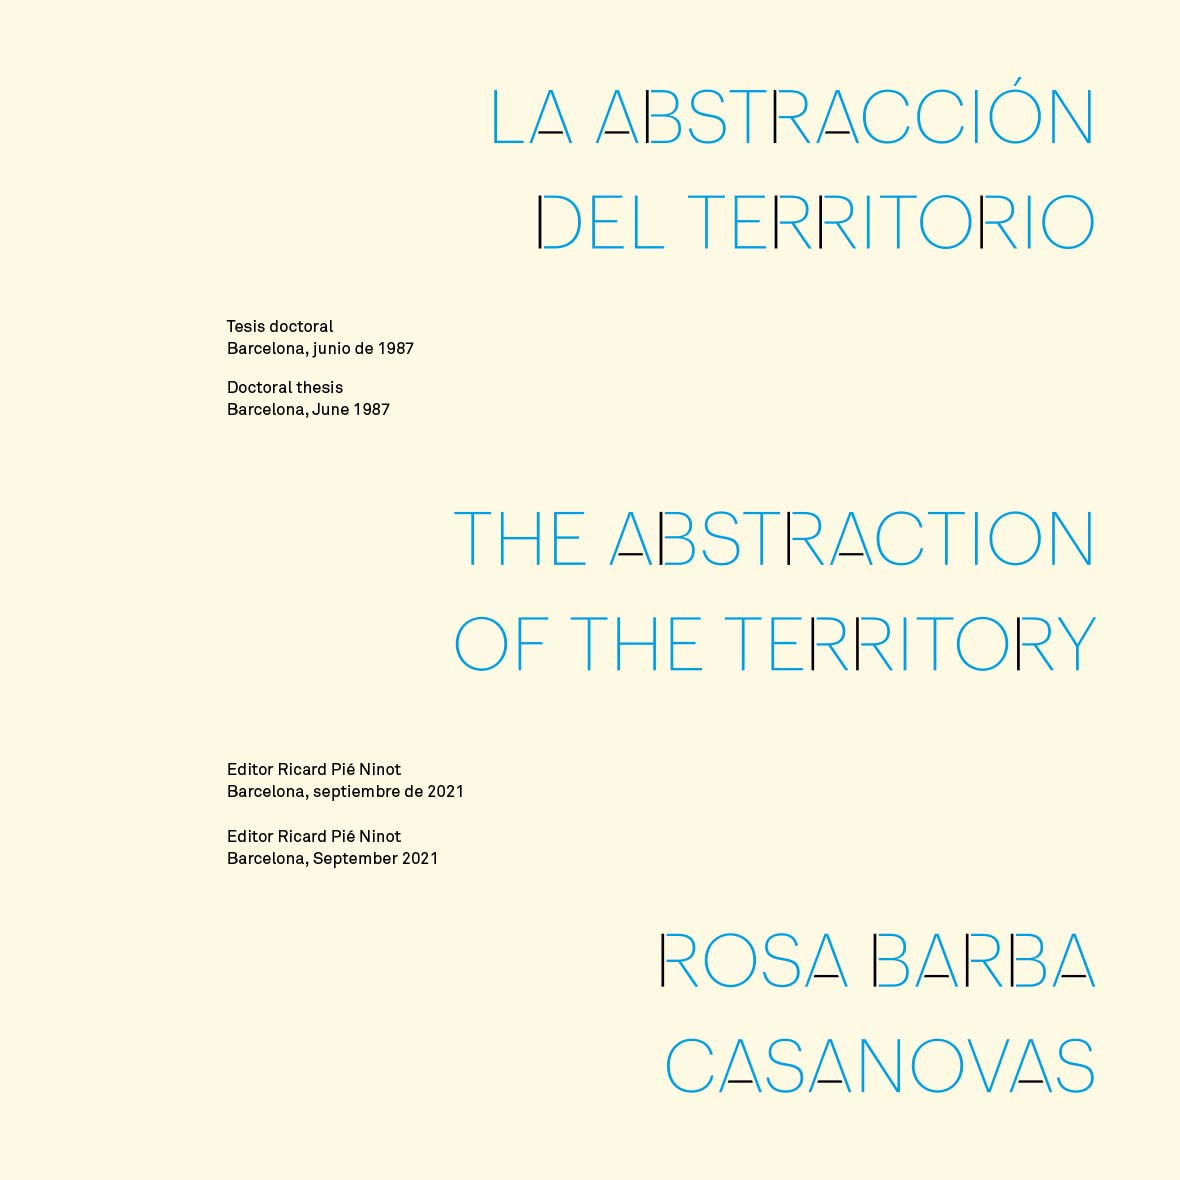 La abstracciÃ³n del territorio. The abstraction of the territory